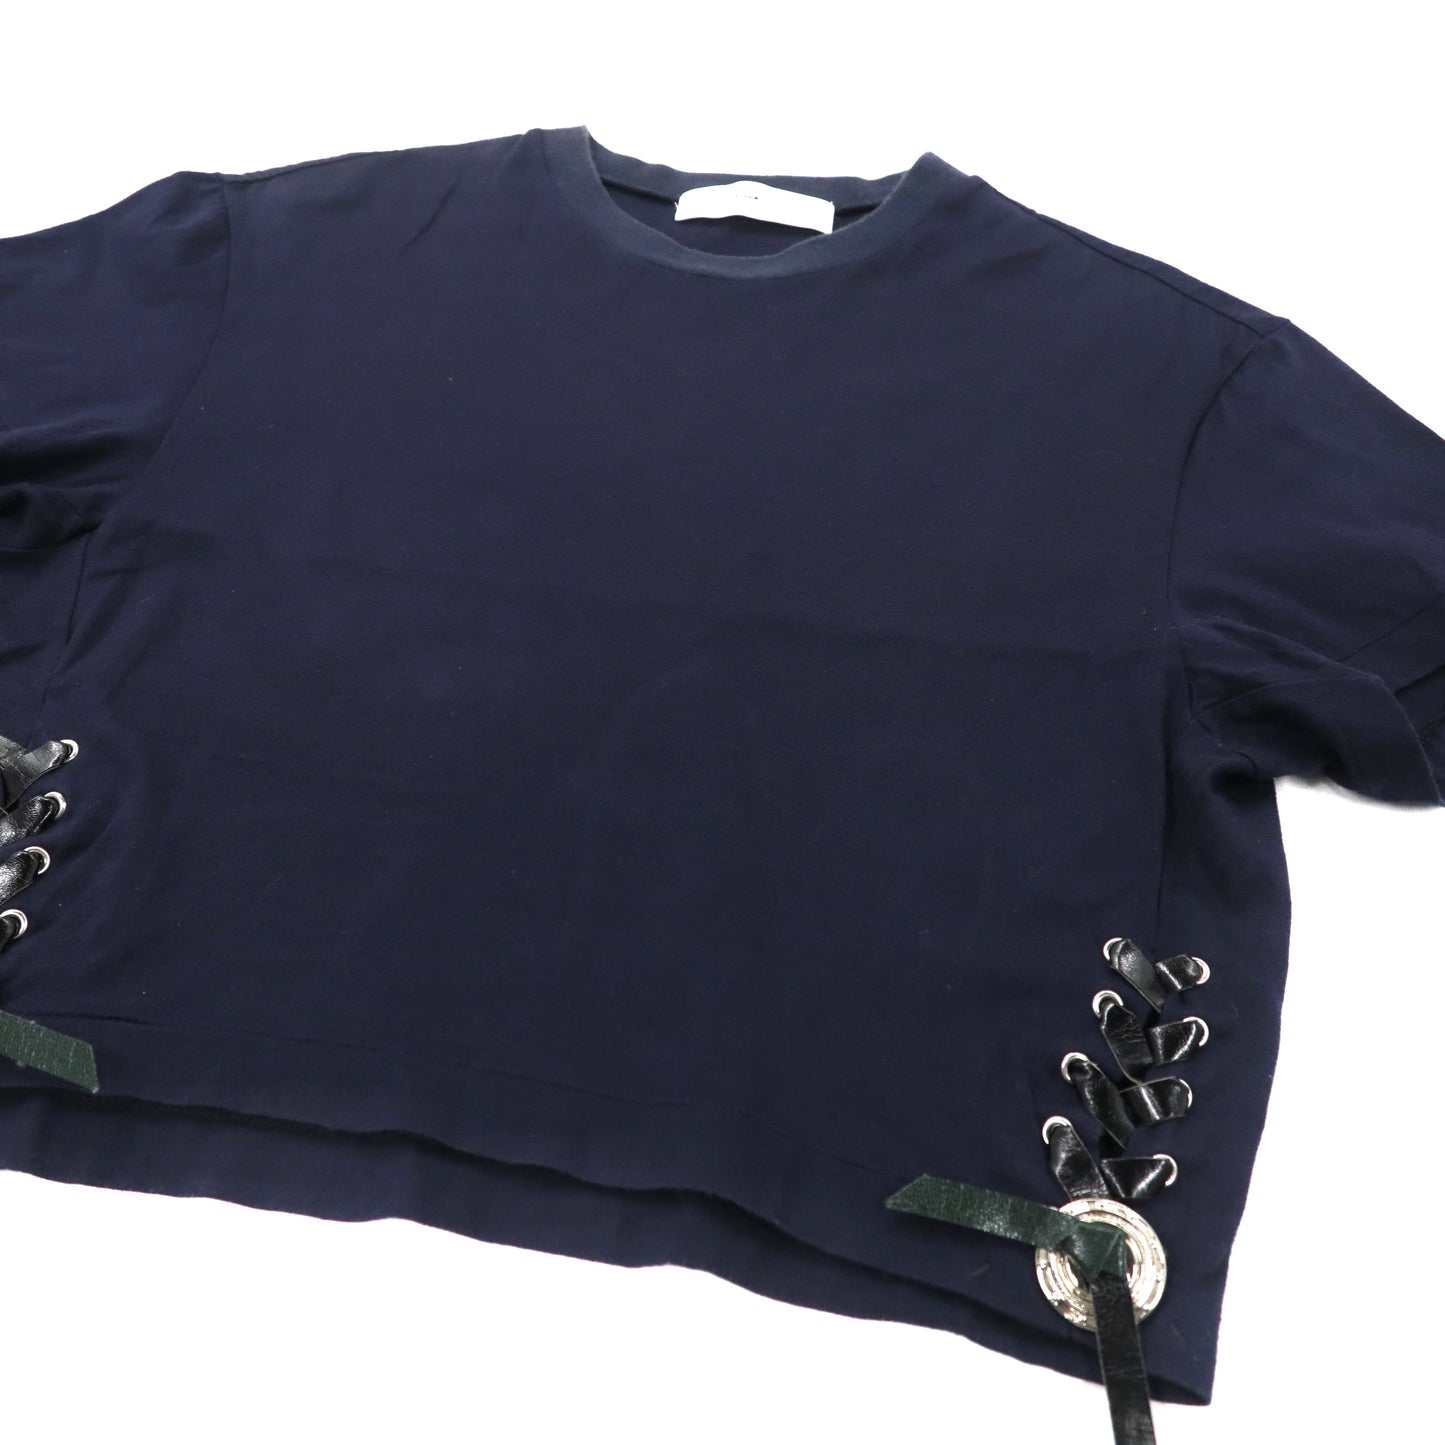 TOGA PULLA Lace-up T-shirt 38 Navy Cotton TP61-JK504 Japan MADE